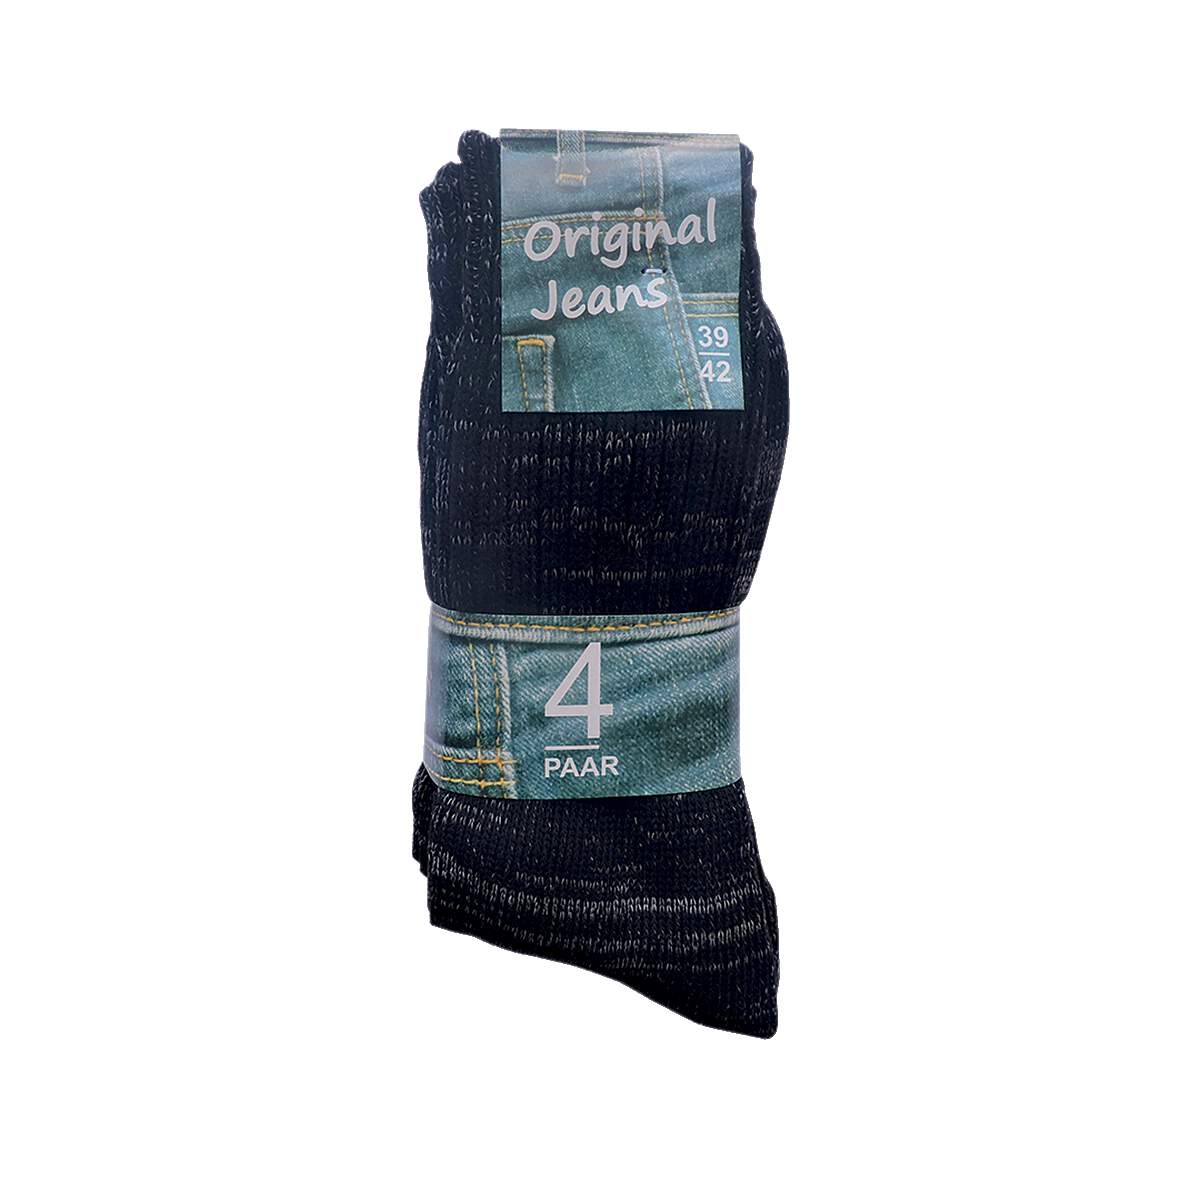 1190309 - Socken Original Jeans 5er